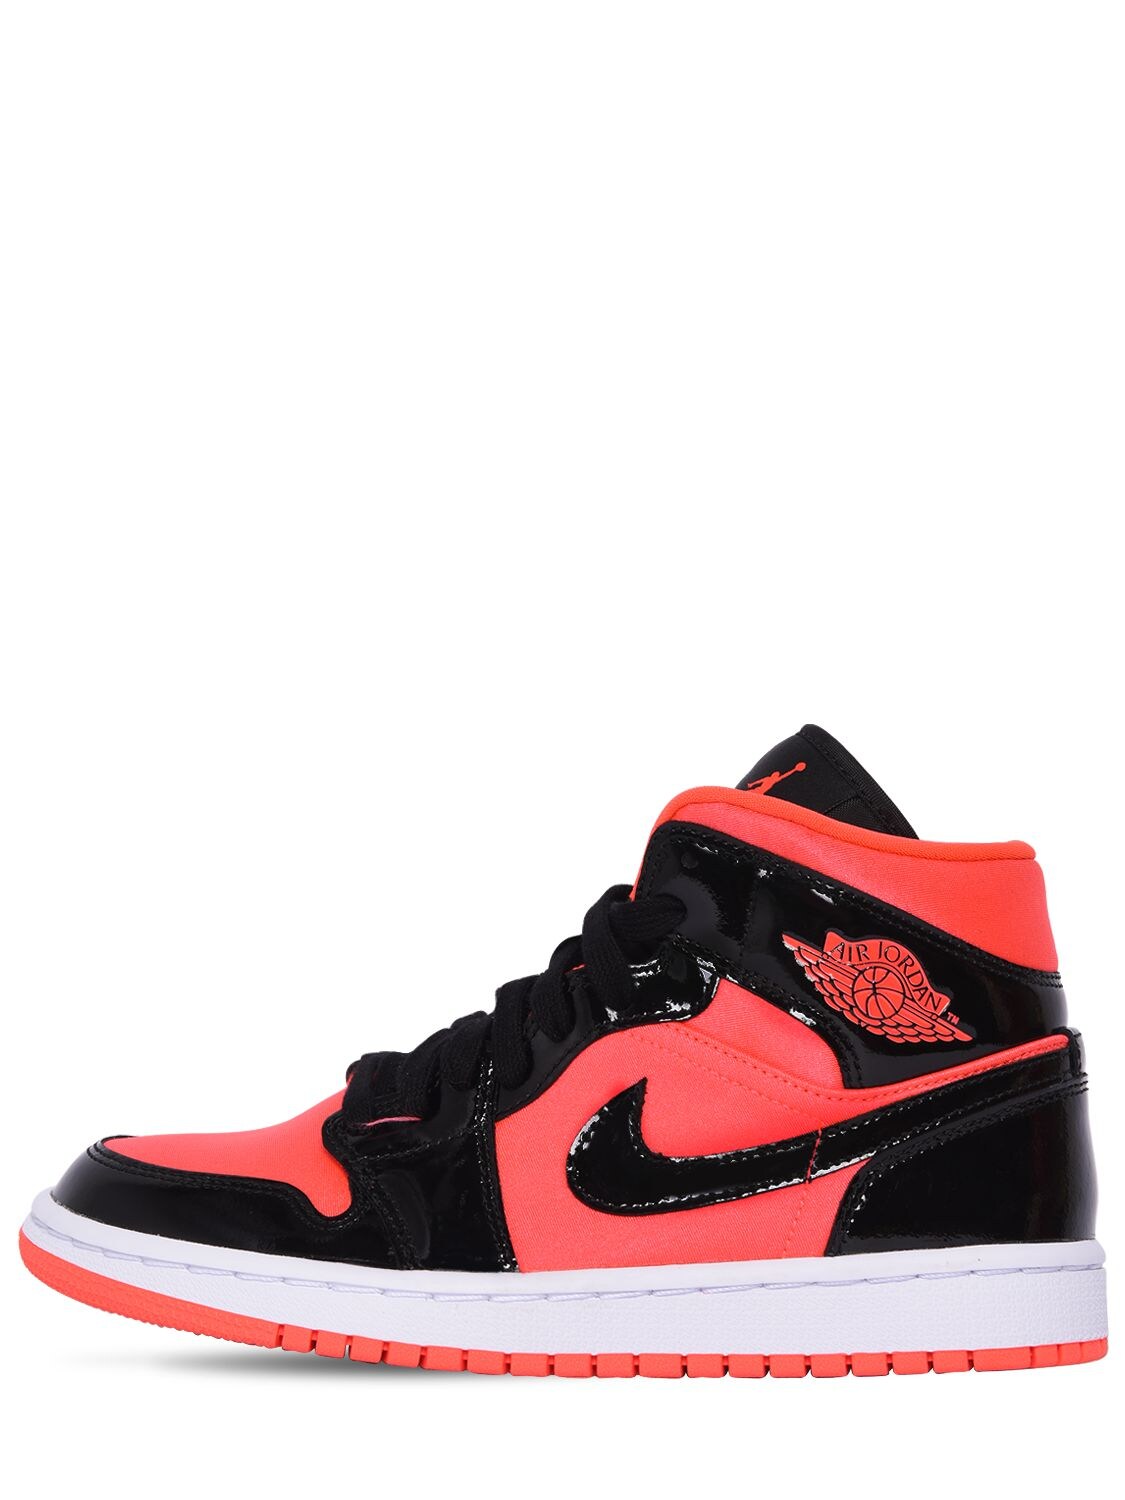 Nike Wmns Air Jordan 1 Mid Sneakers In Bright Crimson